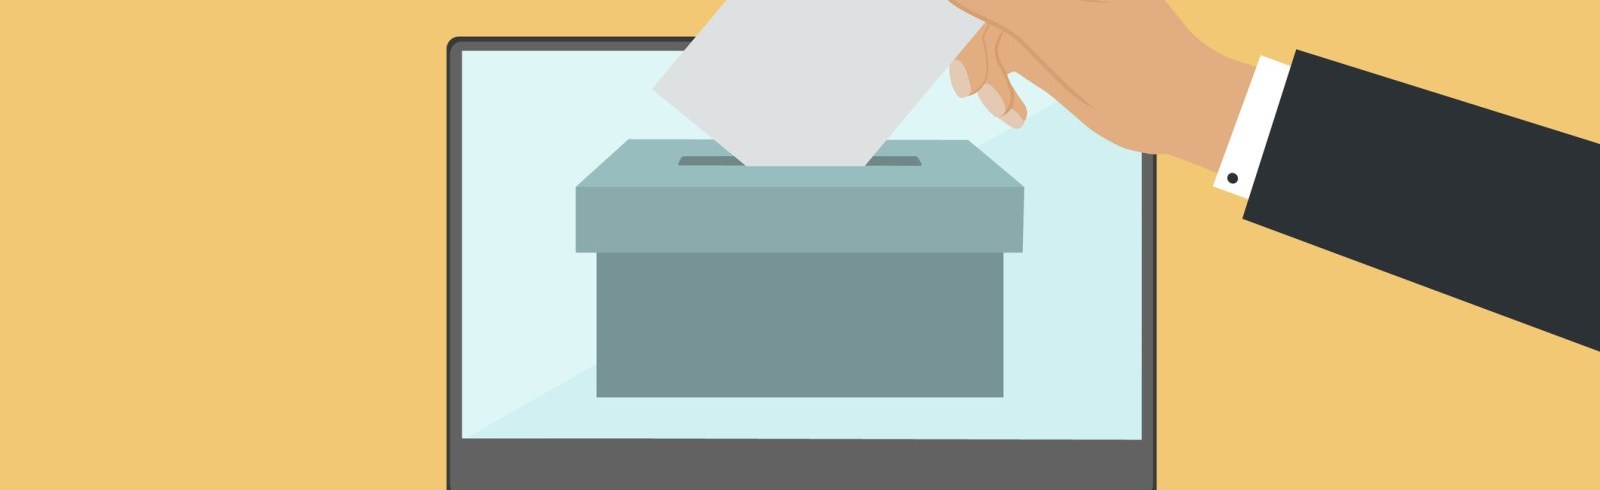 Election envelope going in a ballot box